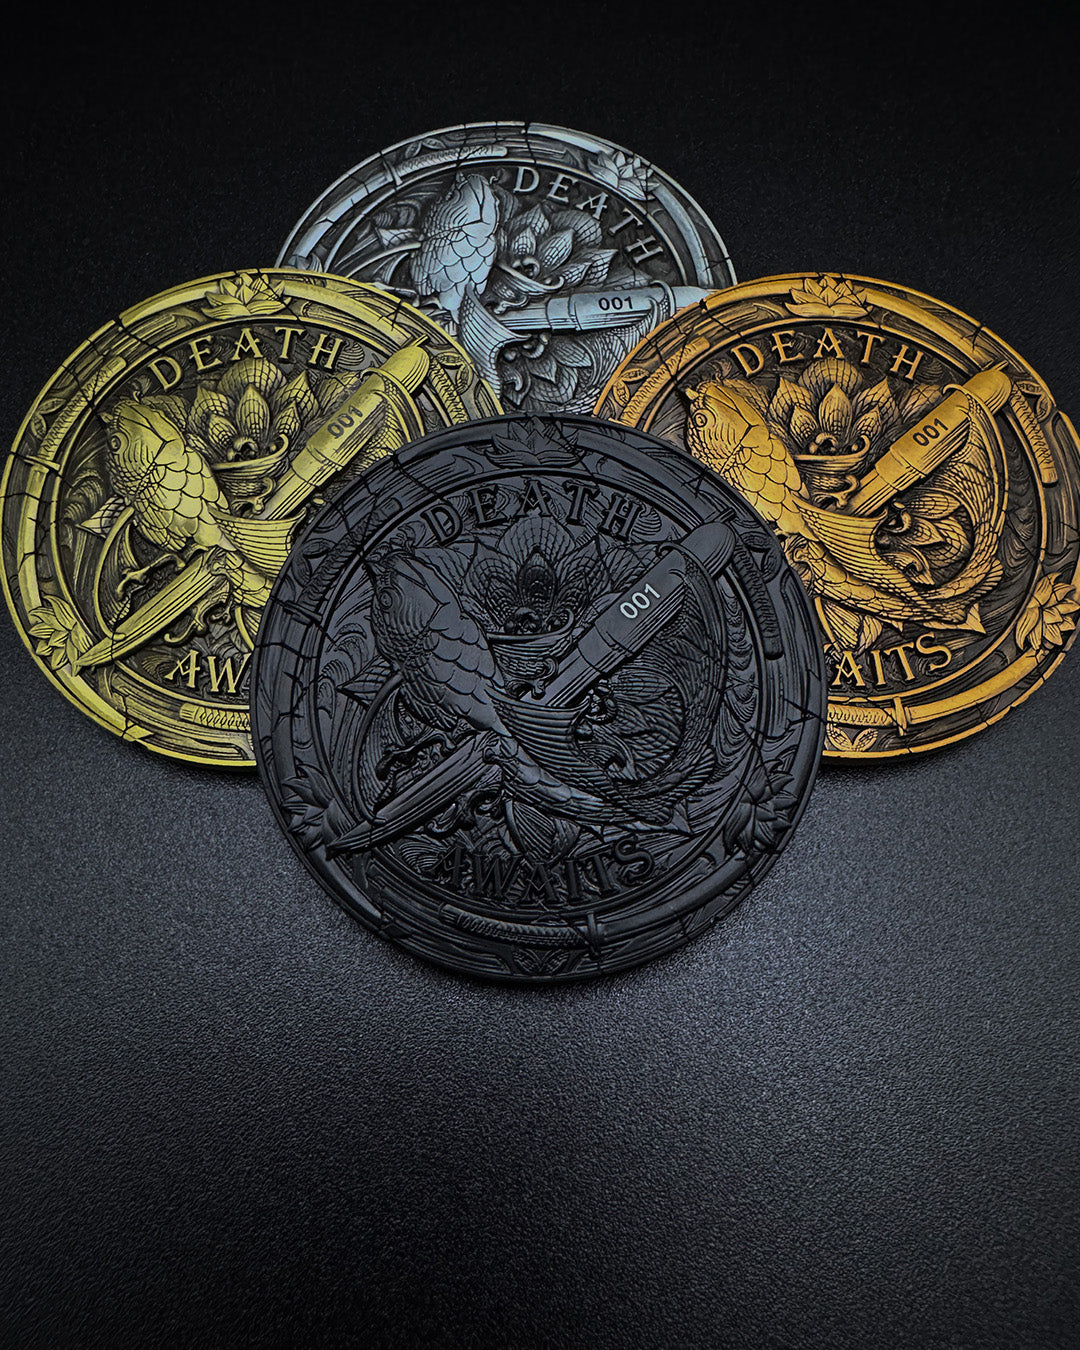 Death awaits VIII - Elite exclusive Coin set